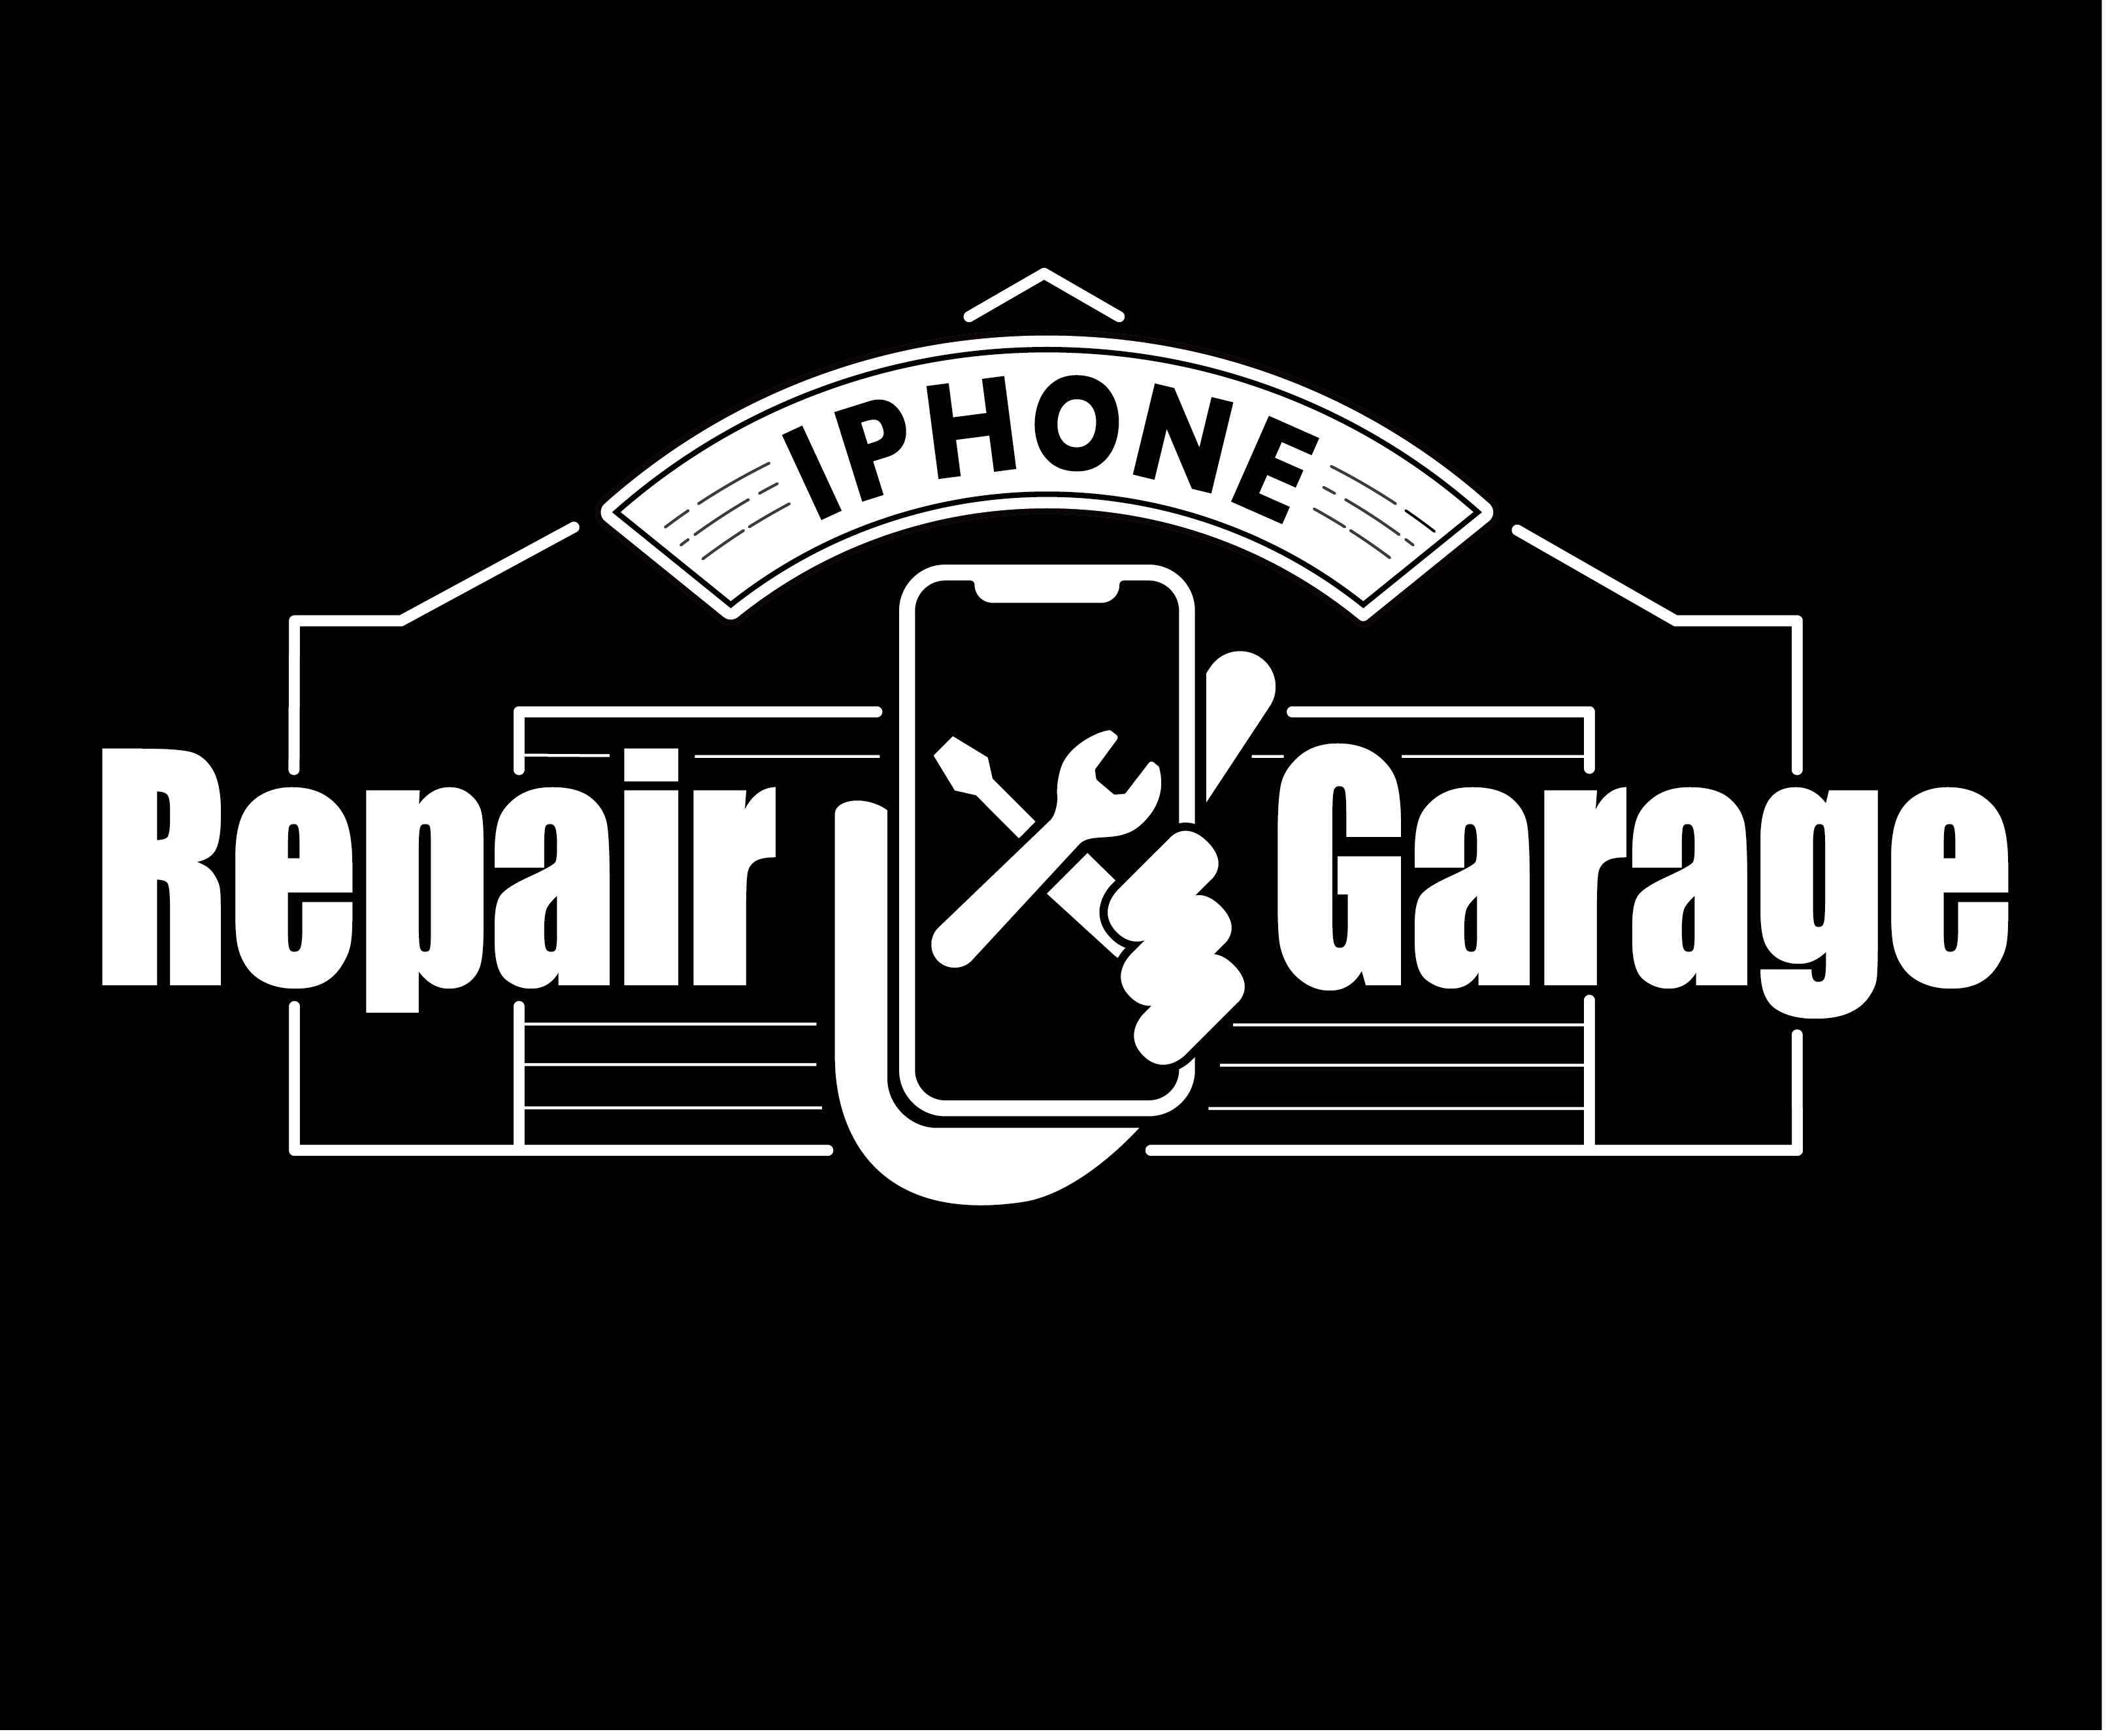 iphone Repair Garage OARAI